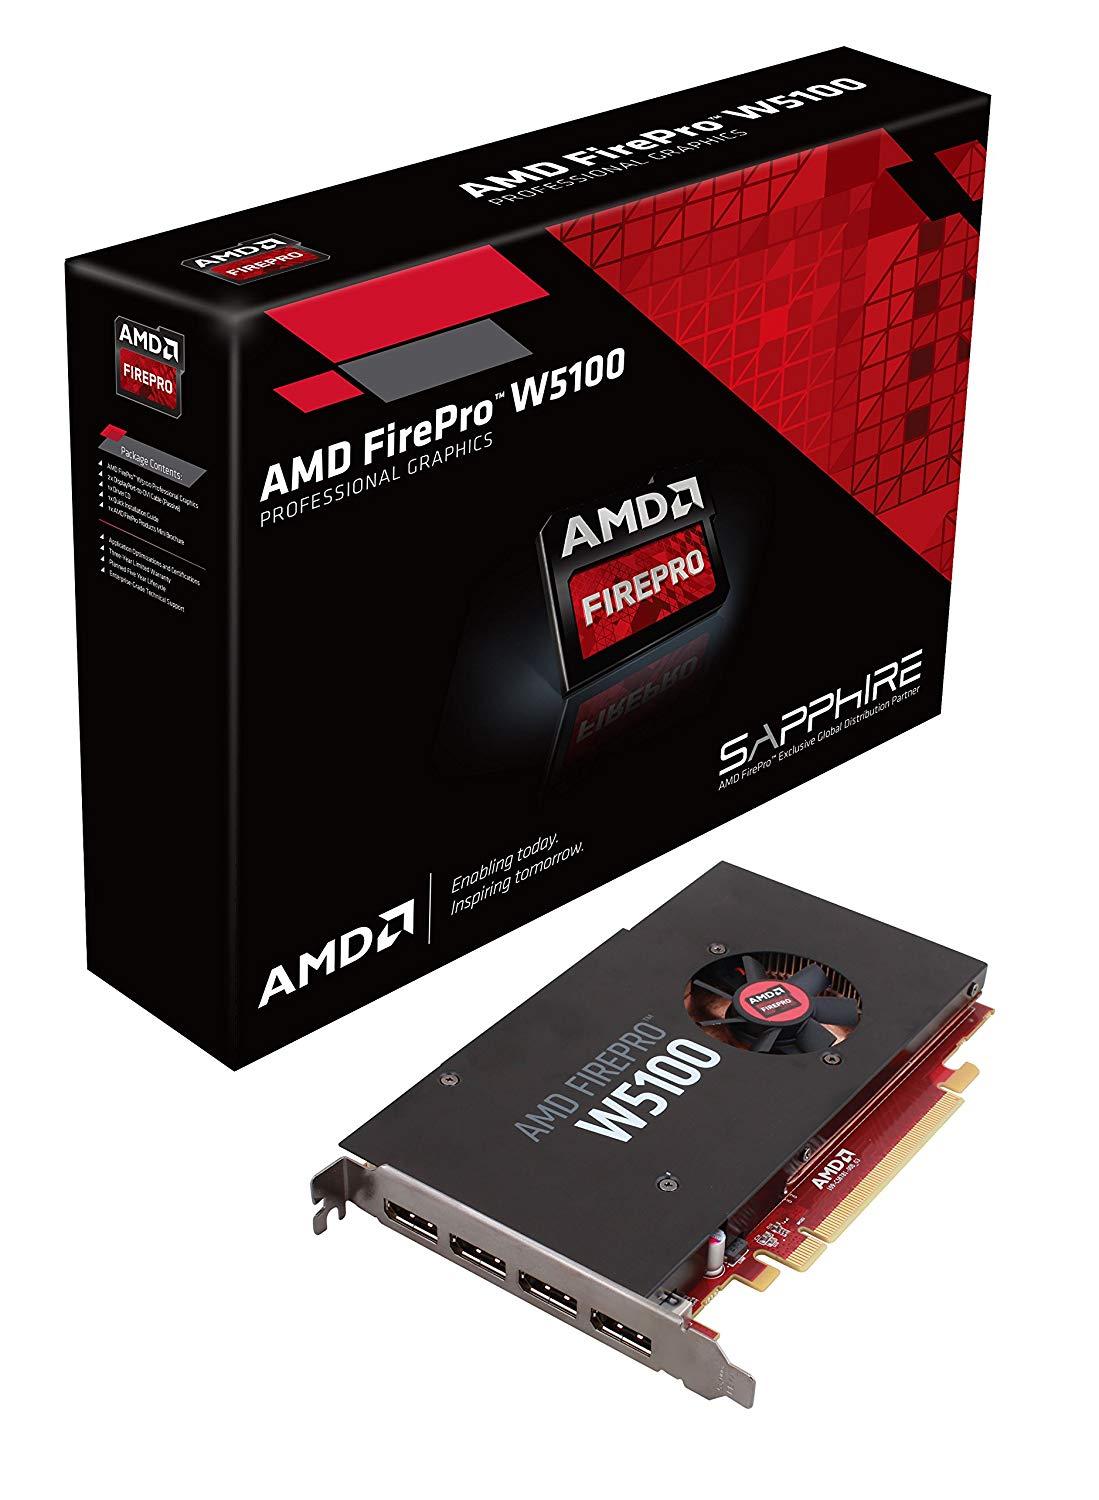 Sapphire AMD Logo - Amazon.com: Sapphire AMD FIREPRO W5100 4GB GDDR5: Computers ...